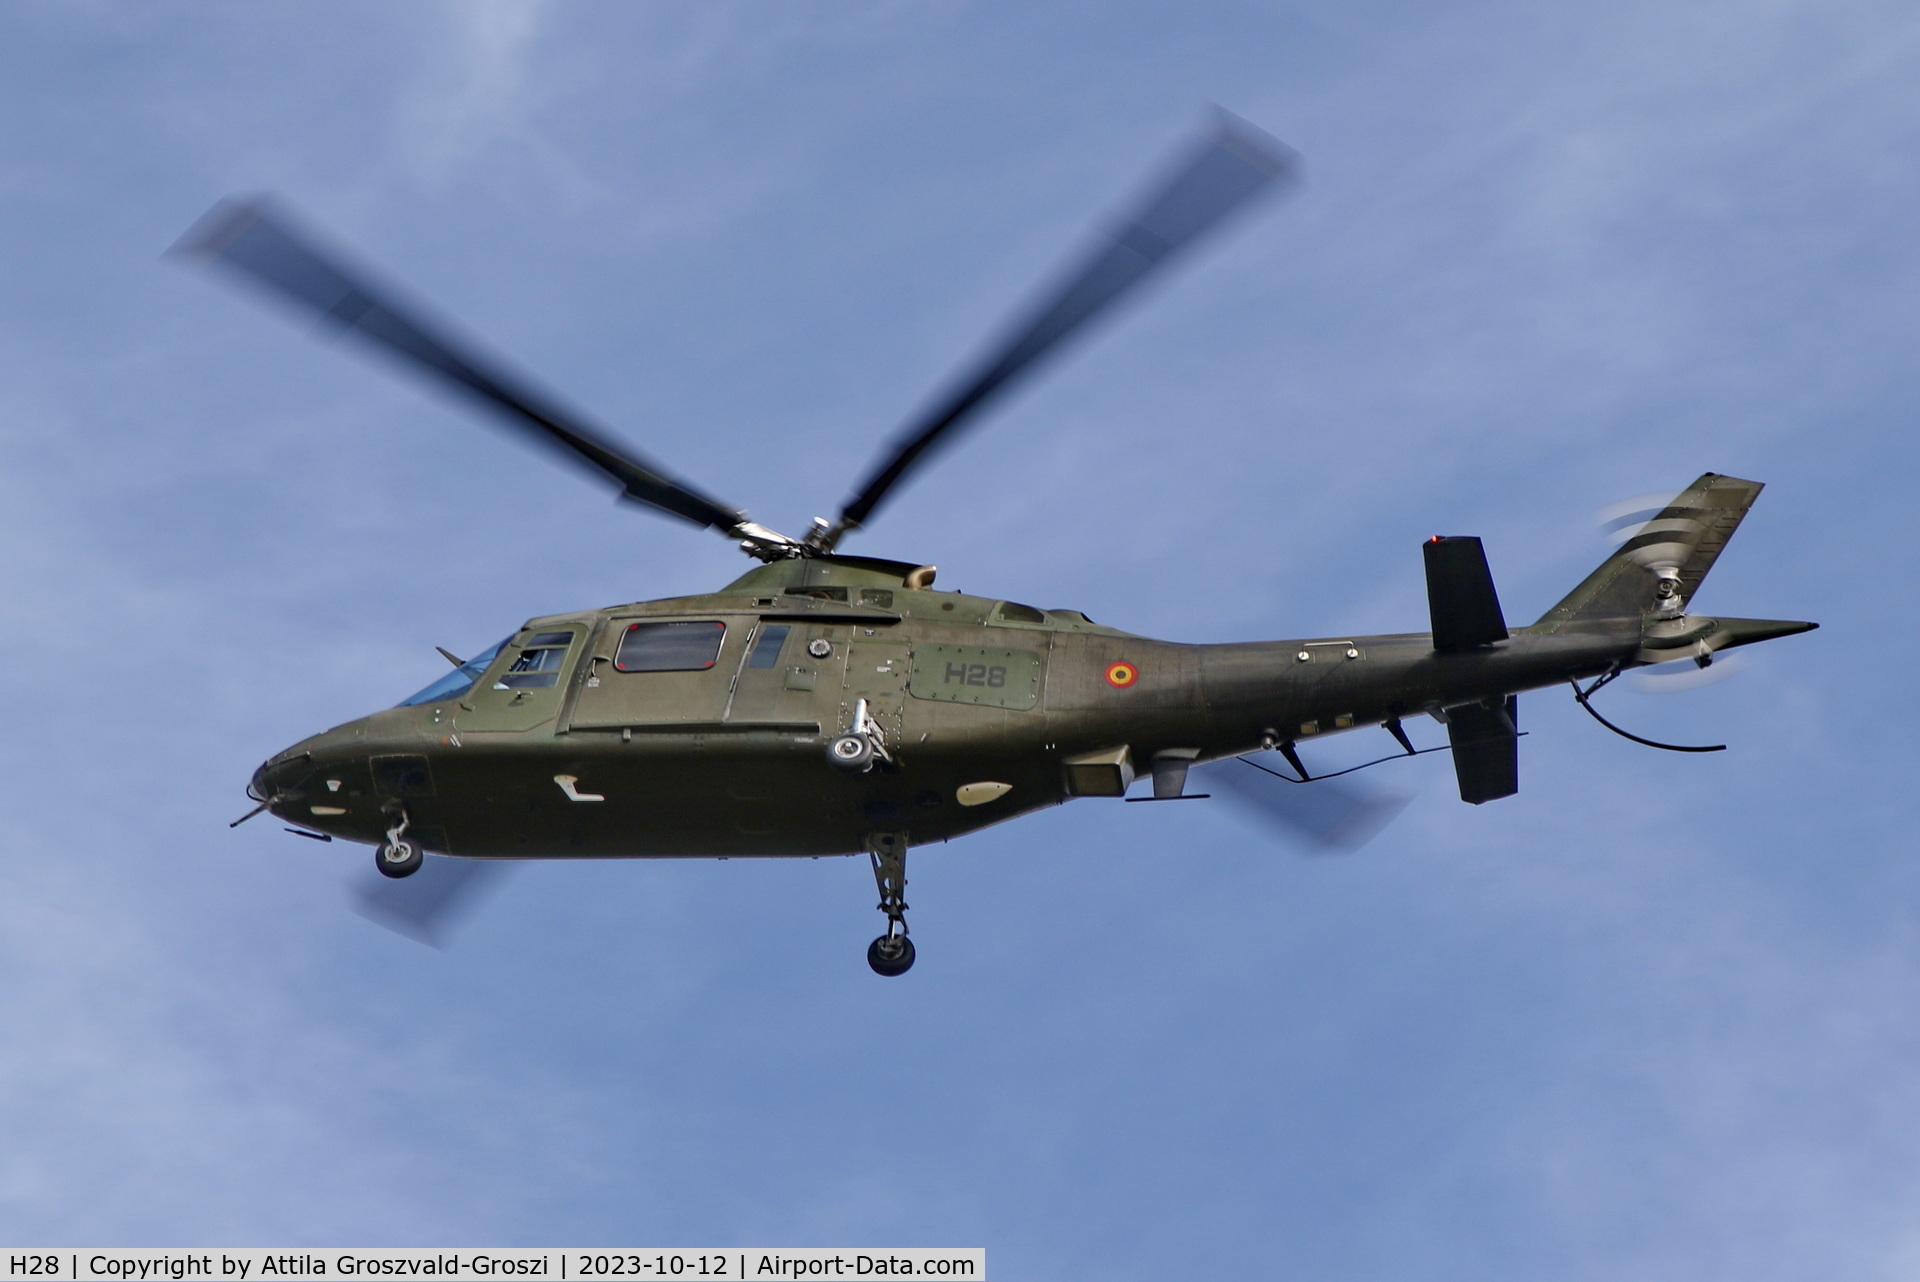 H28, Agusta A-109BA C/N 0328, Jutas-Ujmajor. The Hungarian airforce is his practising base